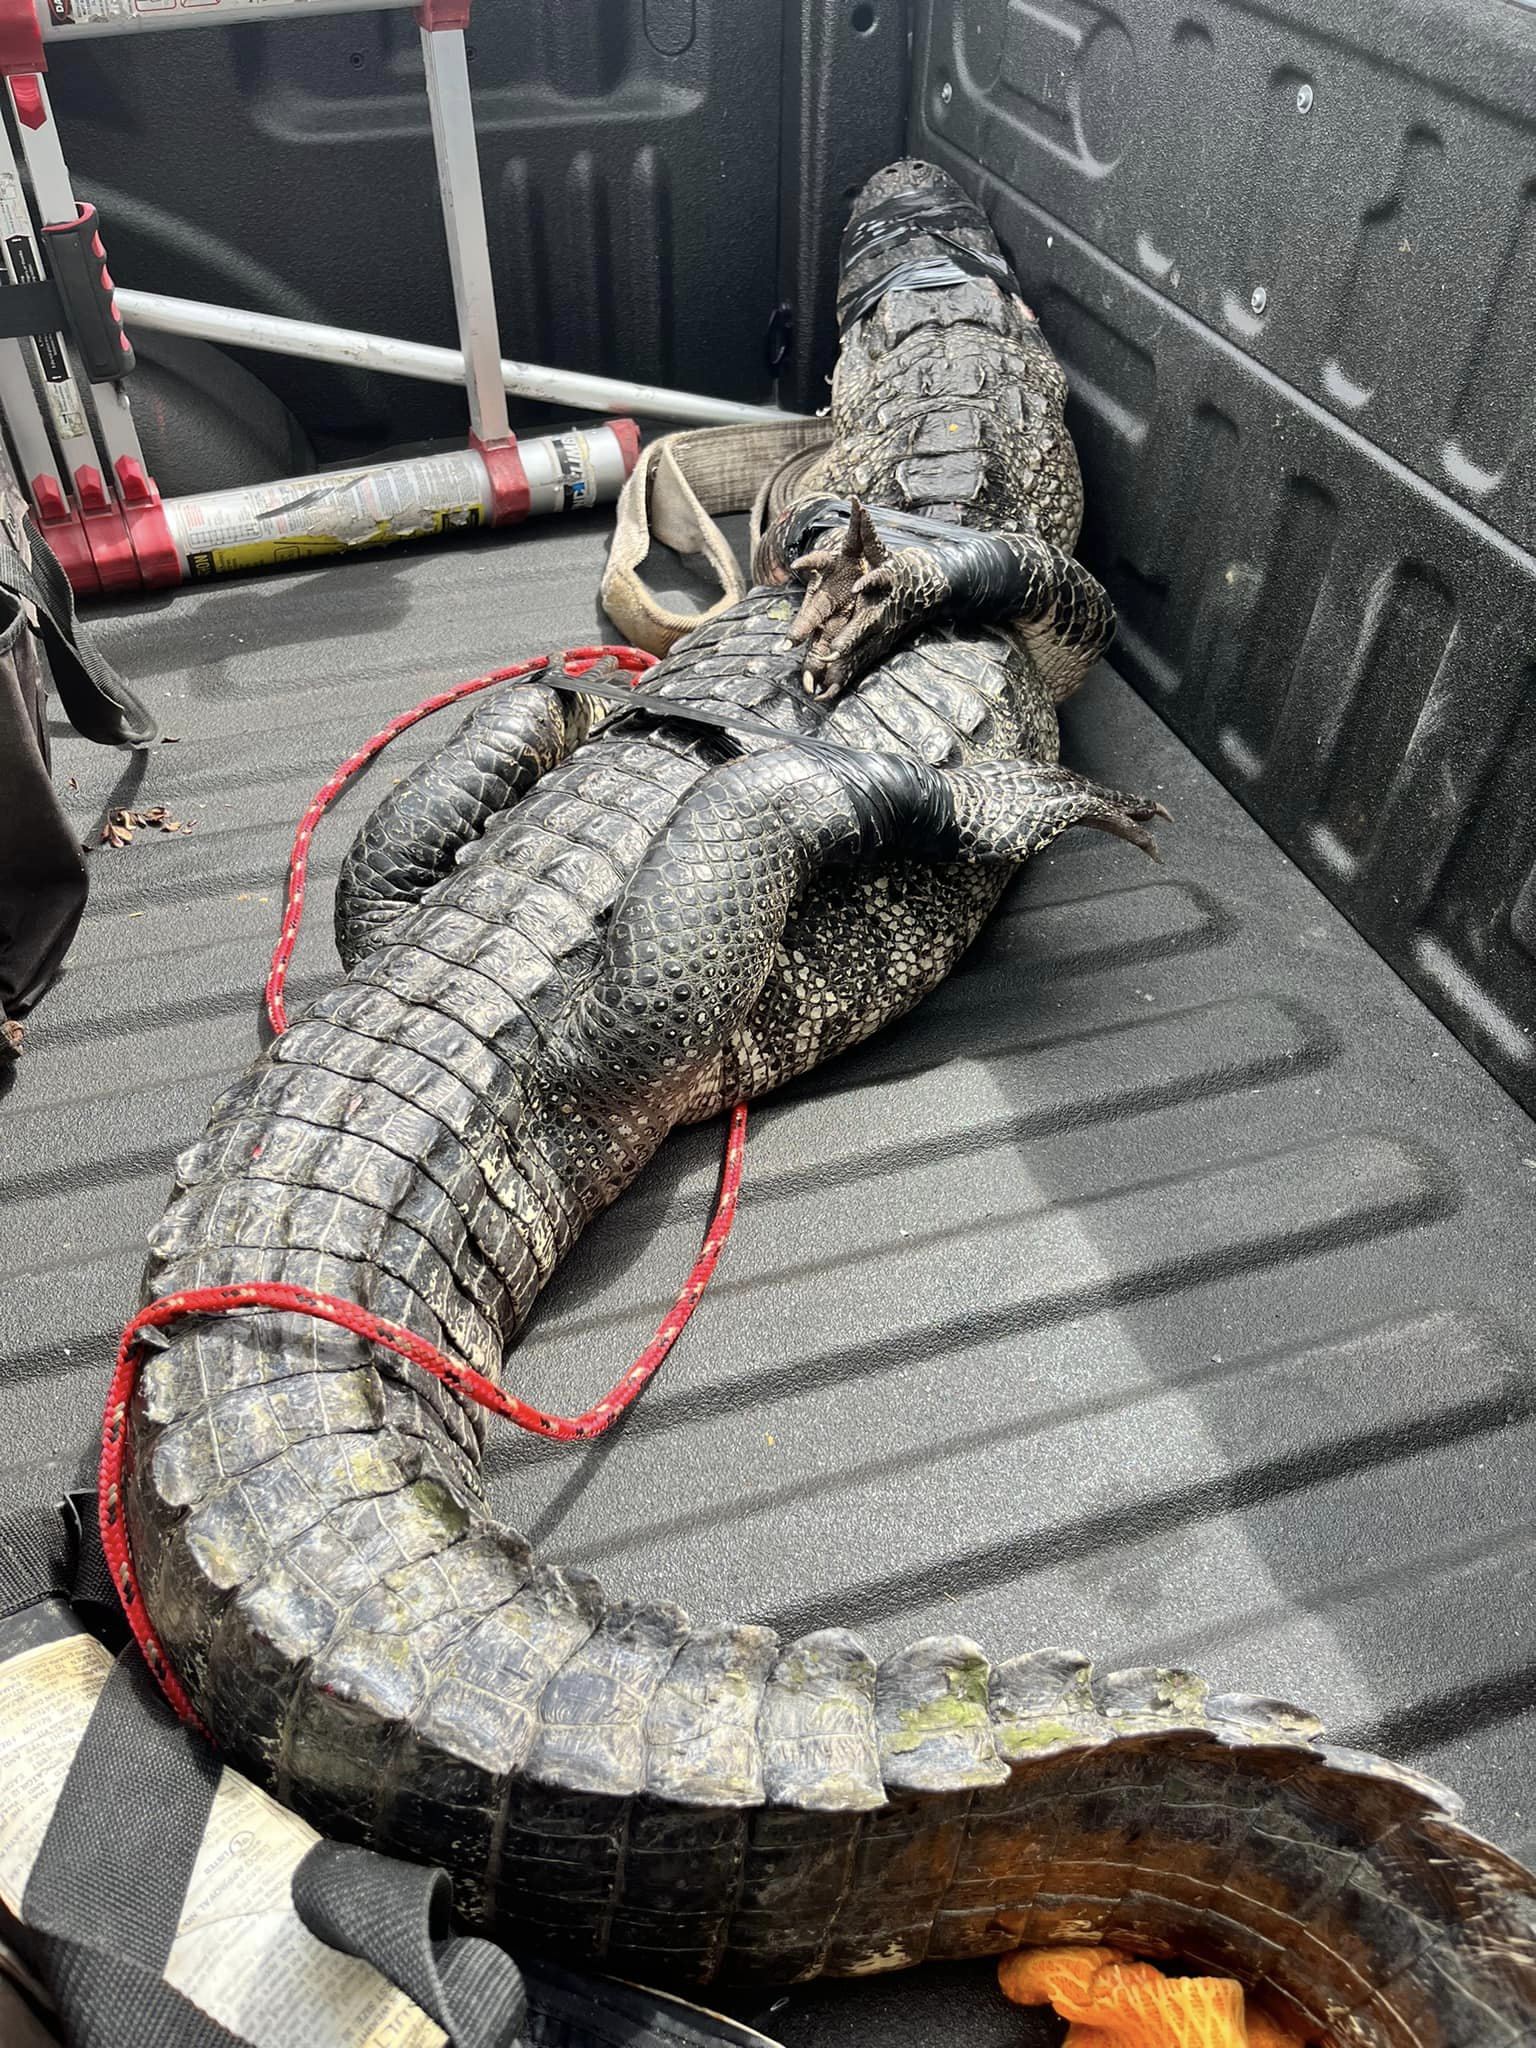 Later gator: Deputies wrangle alligator 'loitering' at Florida Wendy's –  WFTV